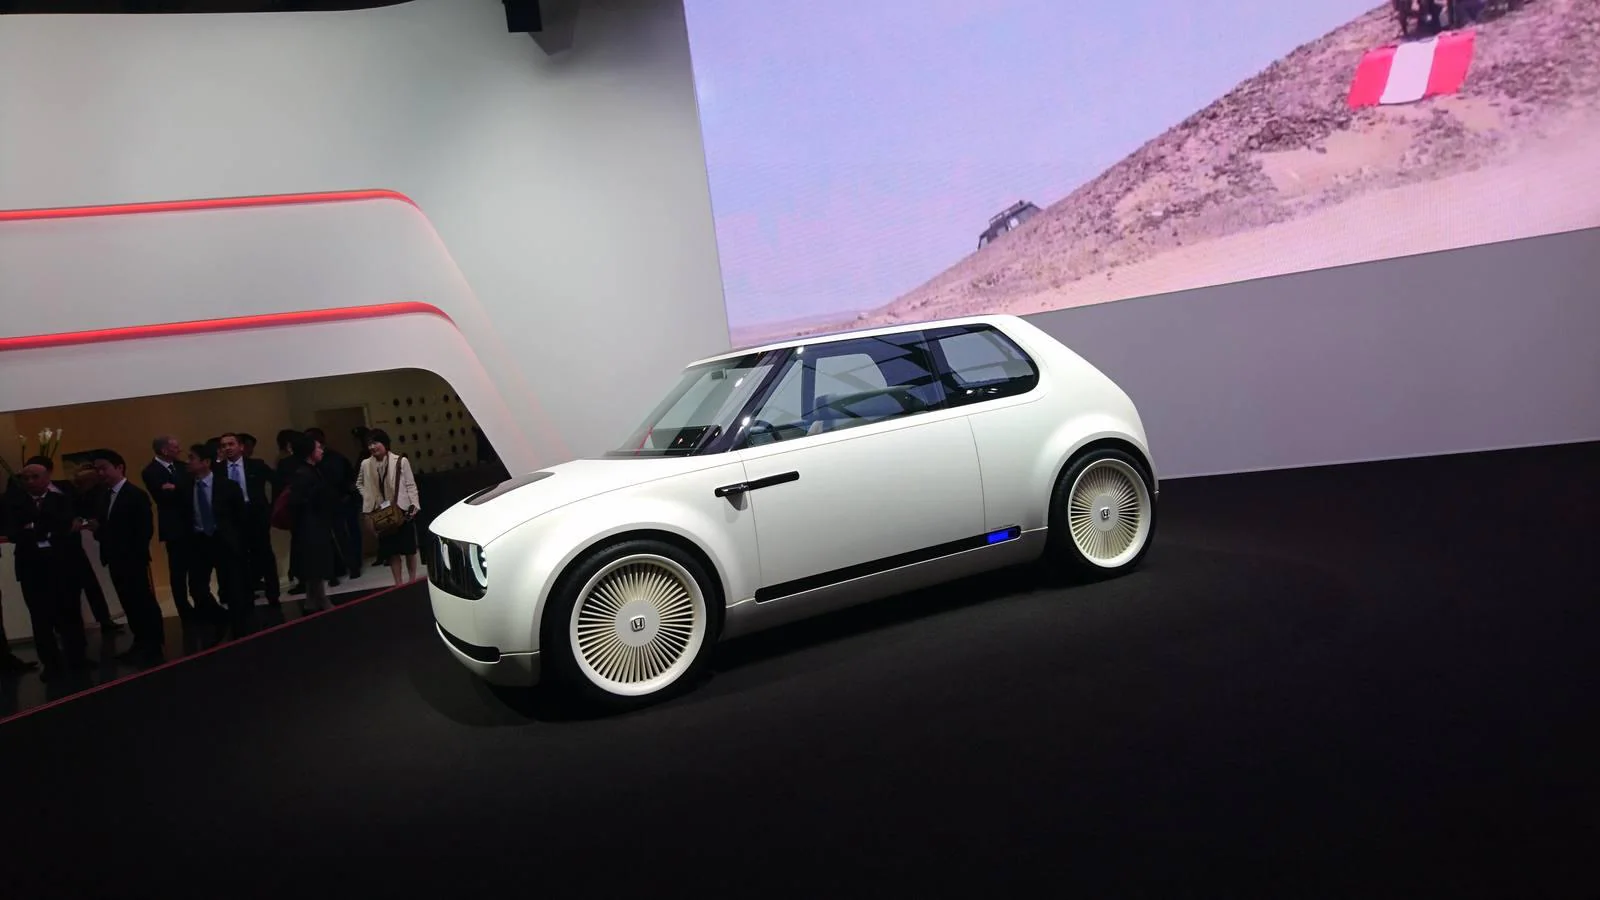 Honda Urban Concept EV. El primer eléctrico de Honda llegará en 2019, pero en 2018 ya admitirá pedidos de este curioso modelo que de momento vemos como "concept car". 